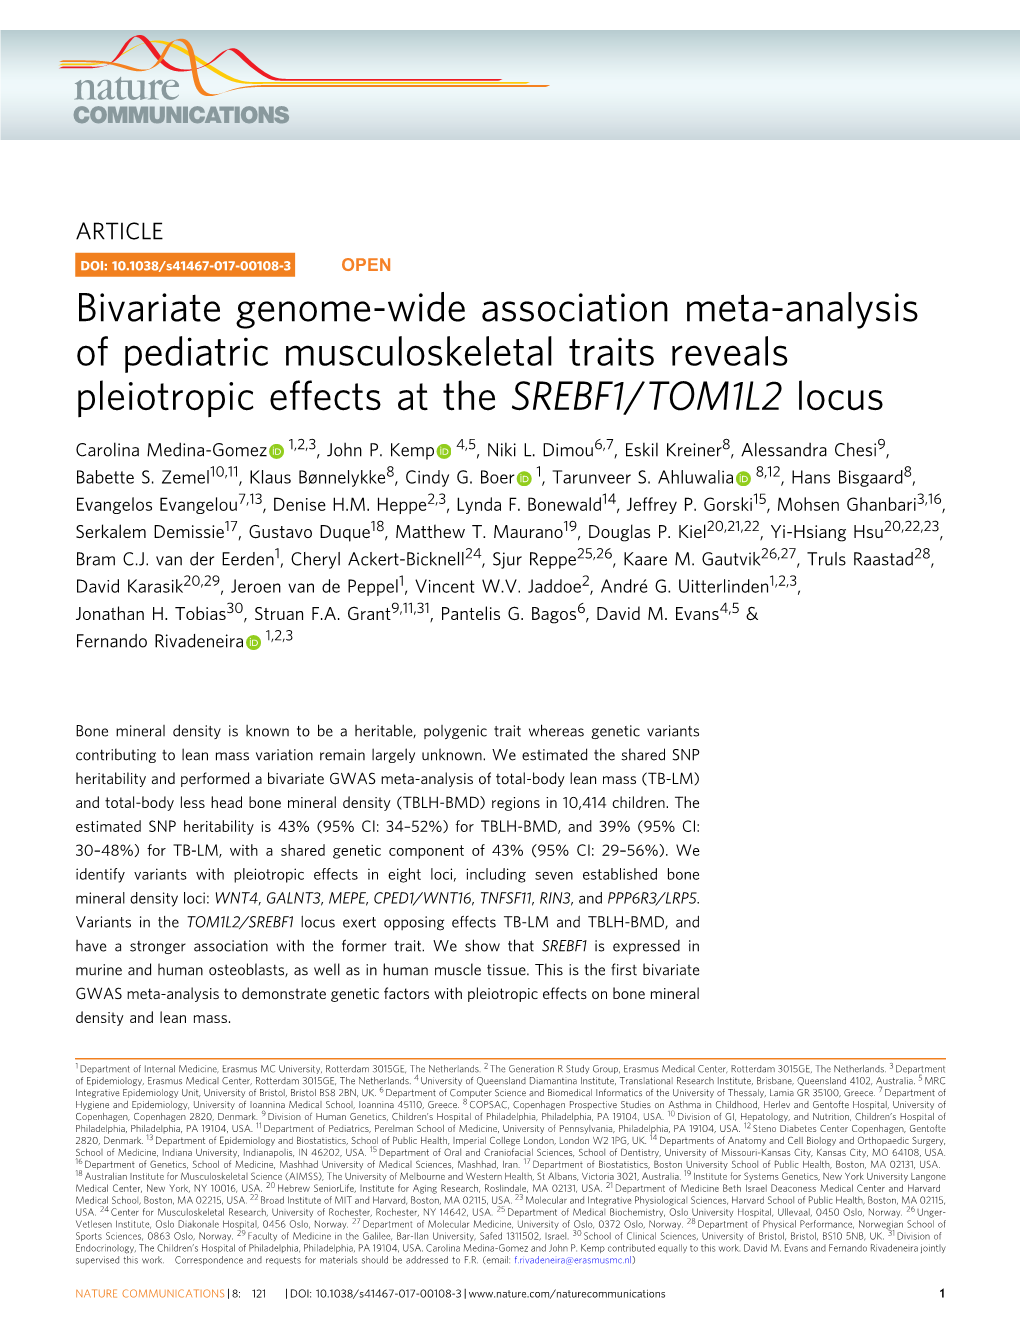 Bivariate Genome-Wide Association Meta-Analysis of Pediatric Musculoskeletal Traits Reveals Pleiotropic Effects at the SREBF1/TOM1L2 Locus